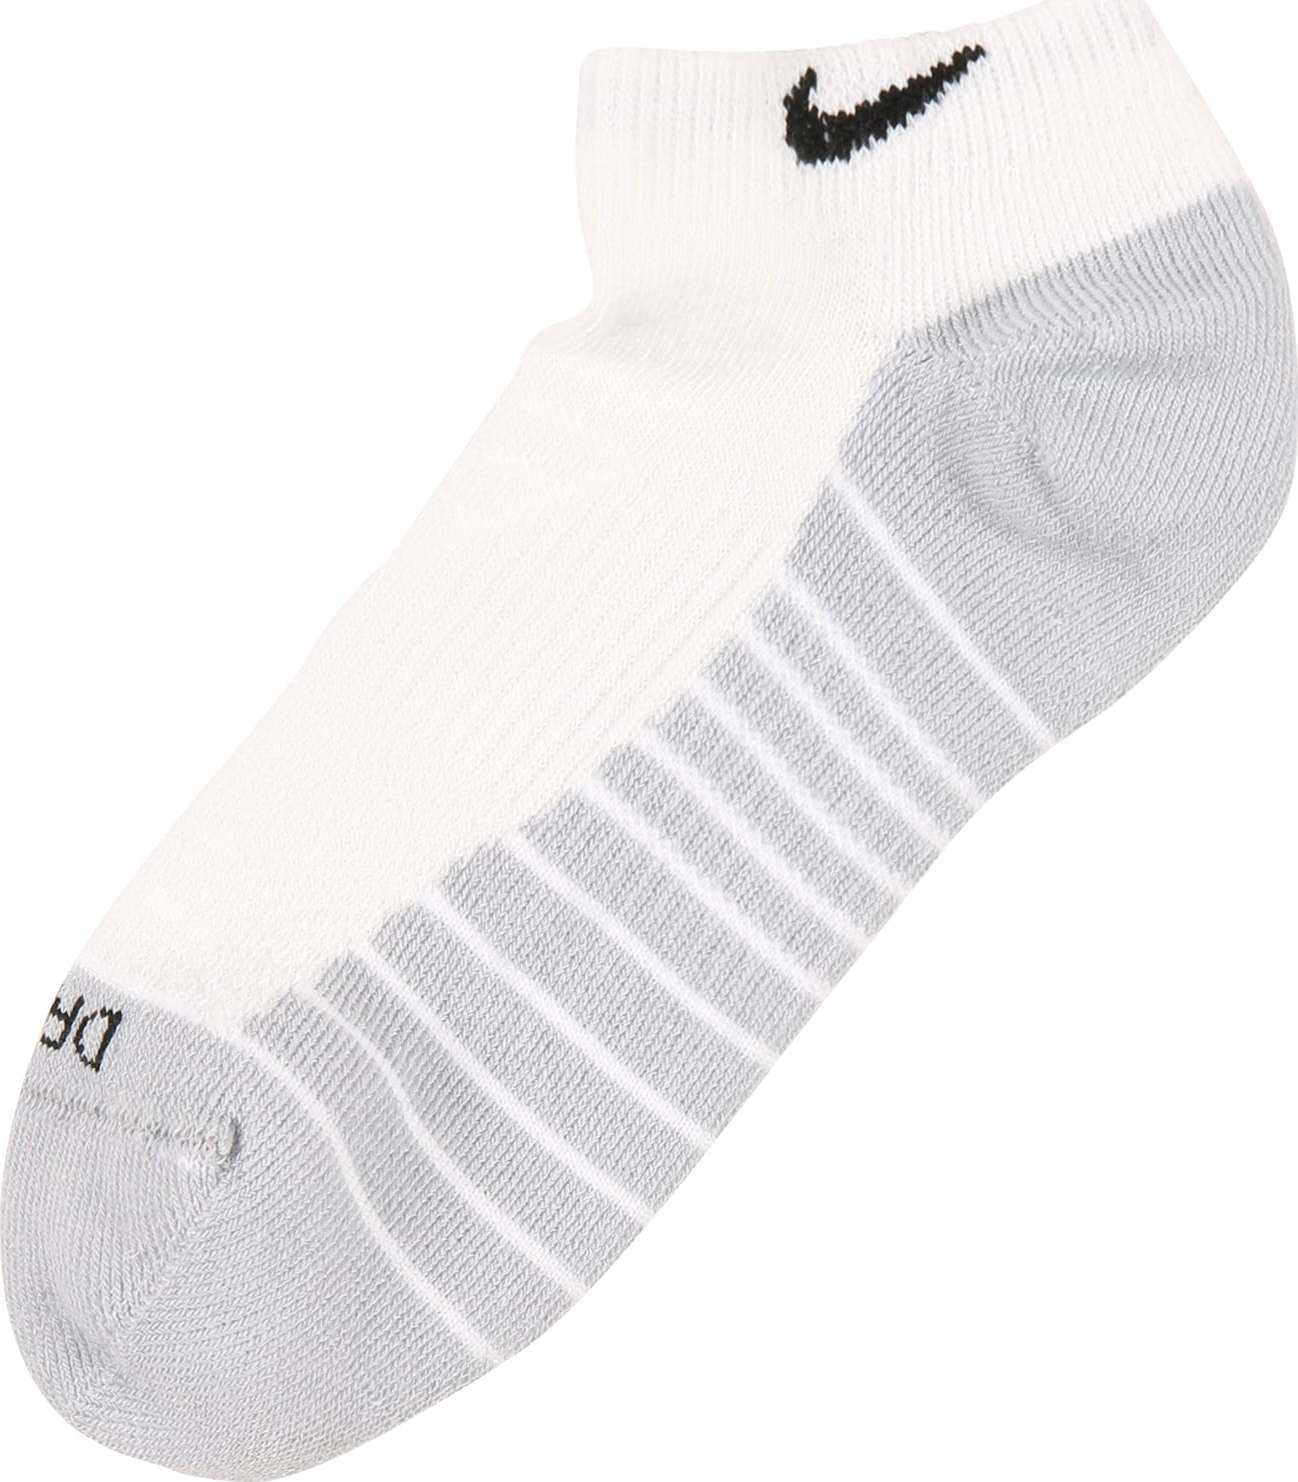 NIKE Sportovní ponožky šedá / černá / bílá